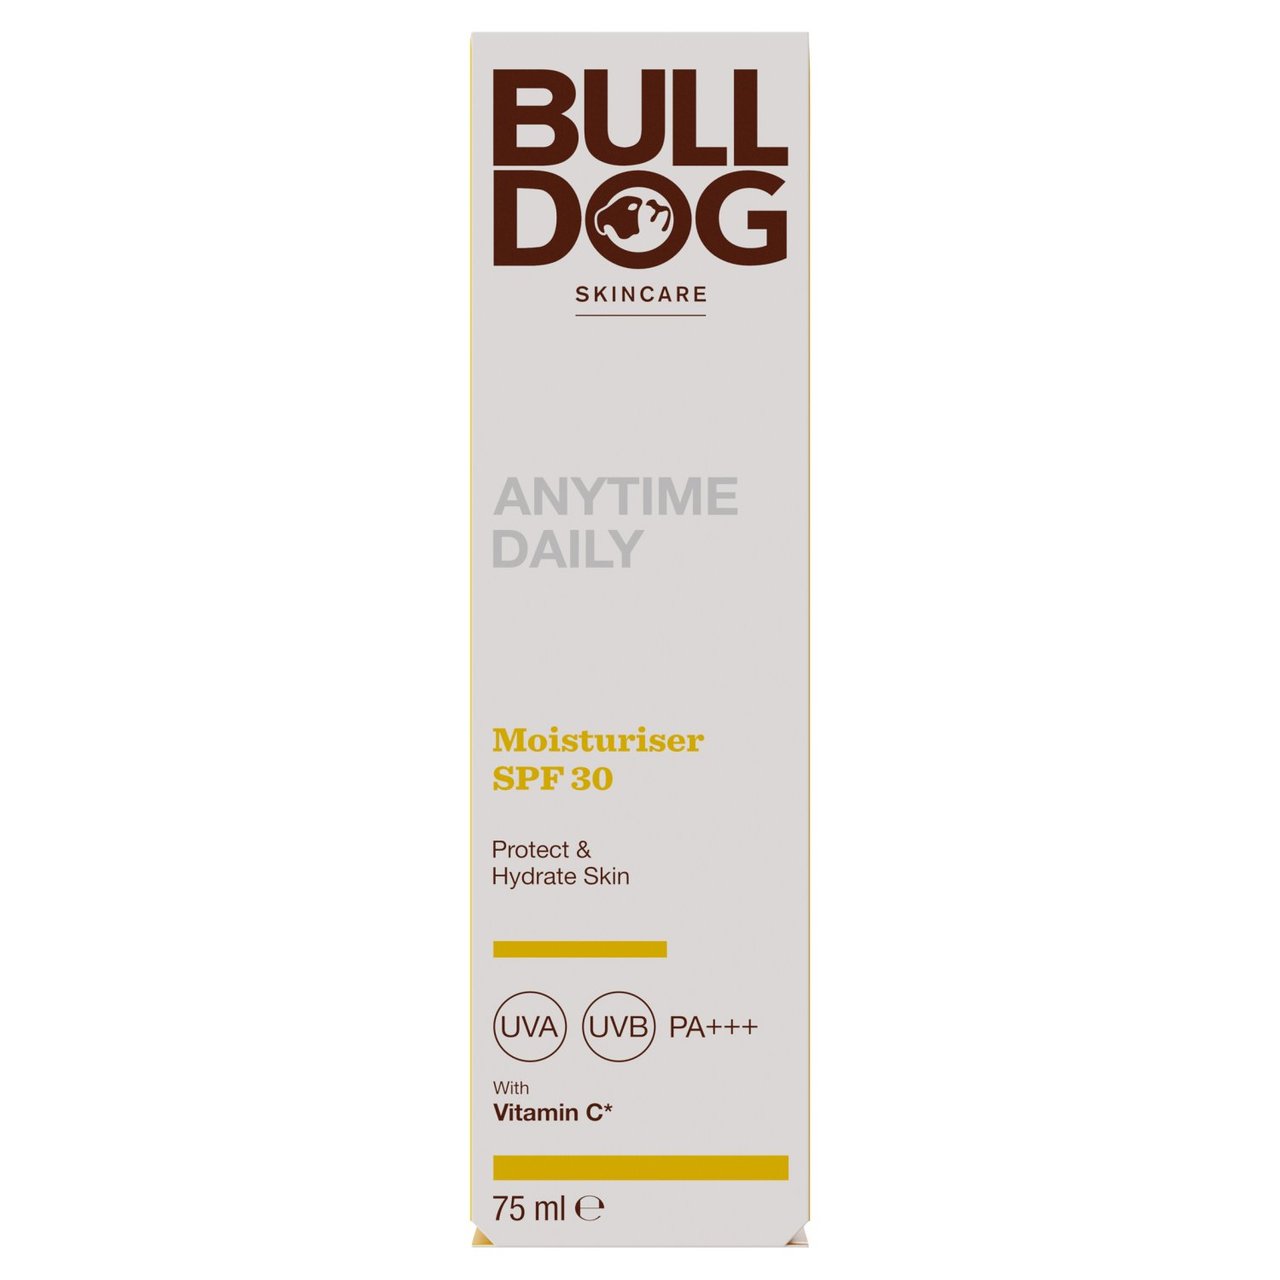 Bulldog Anytime Daily Moisturiser SPF 30